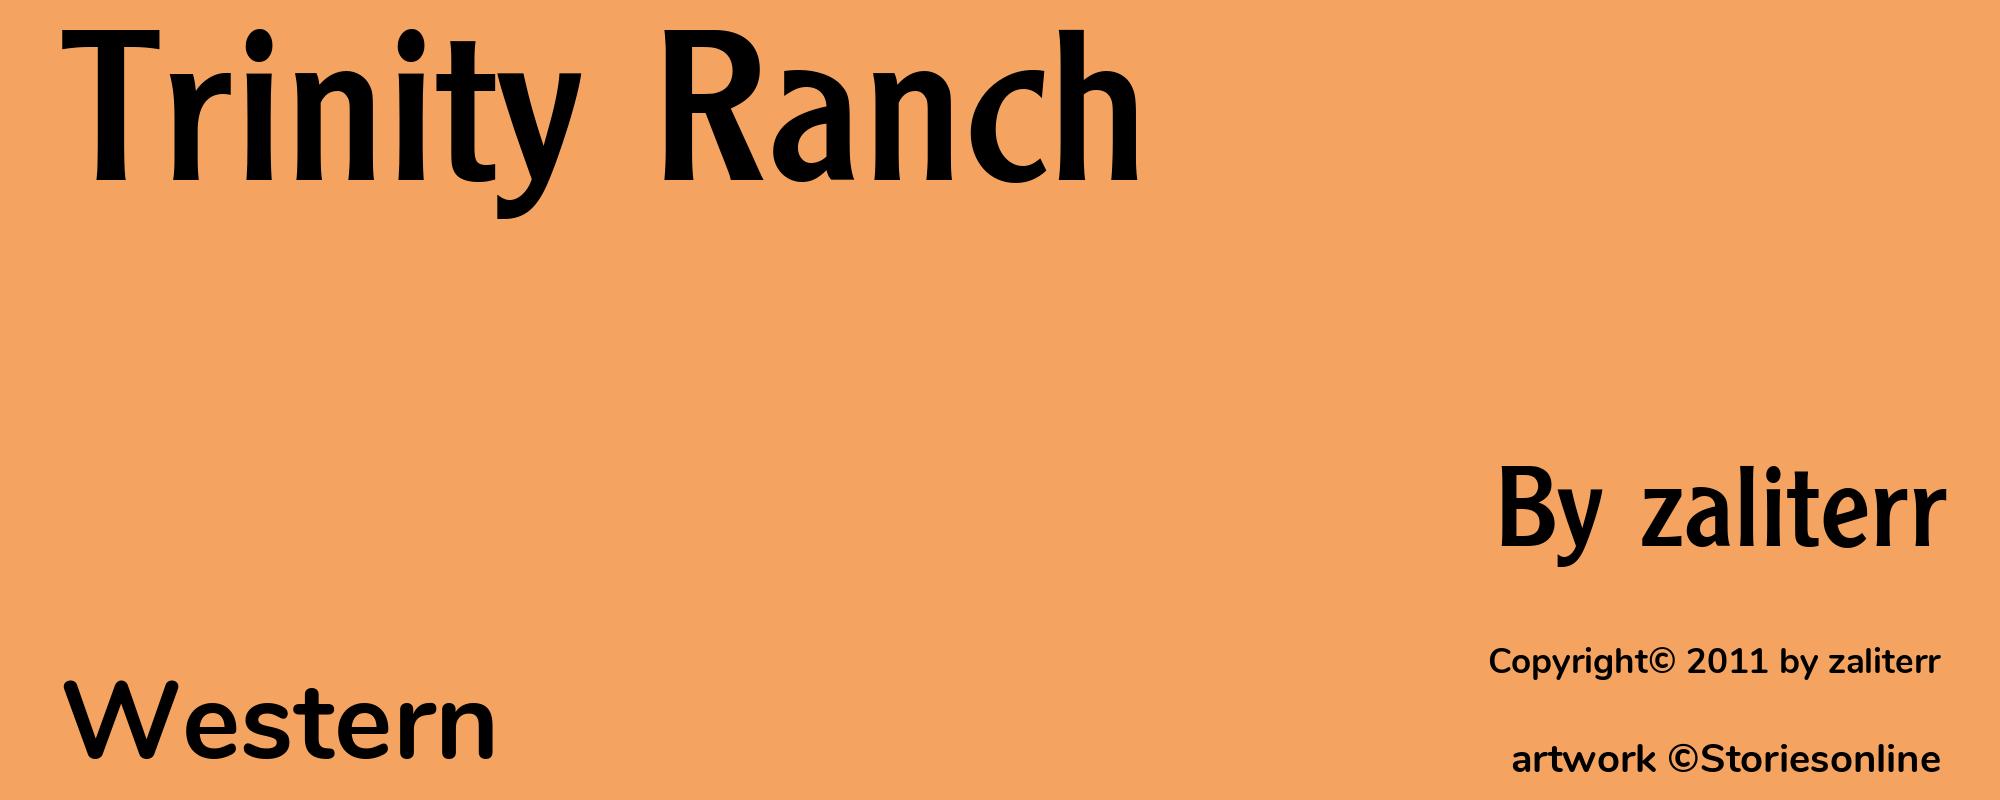 Trinity Ranch - Cover